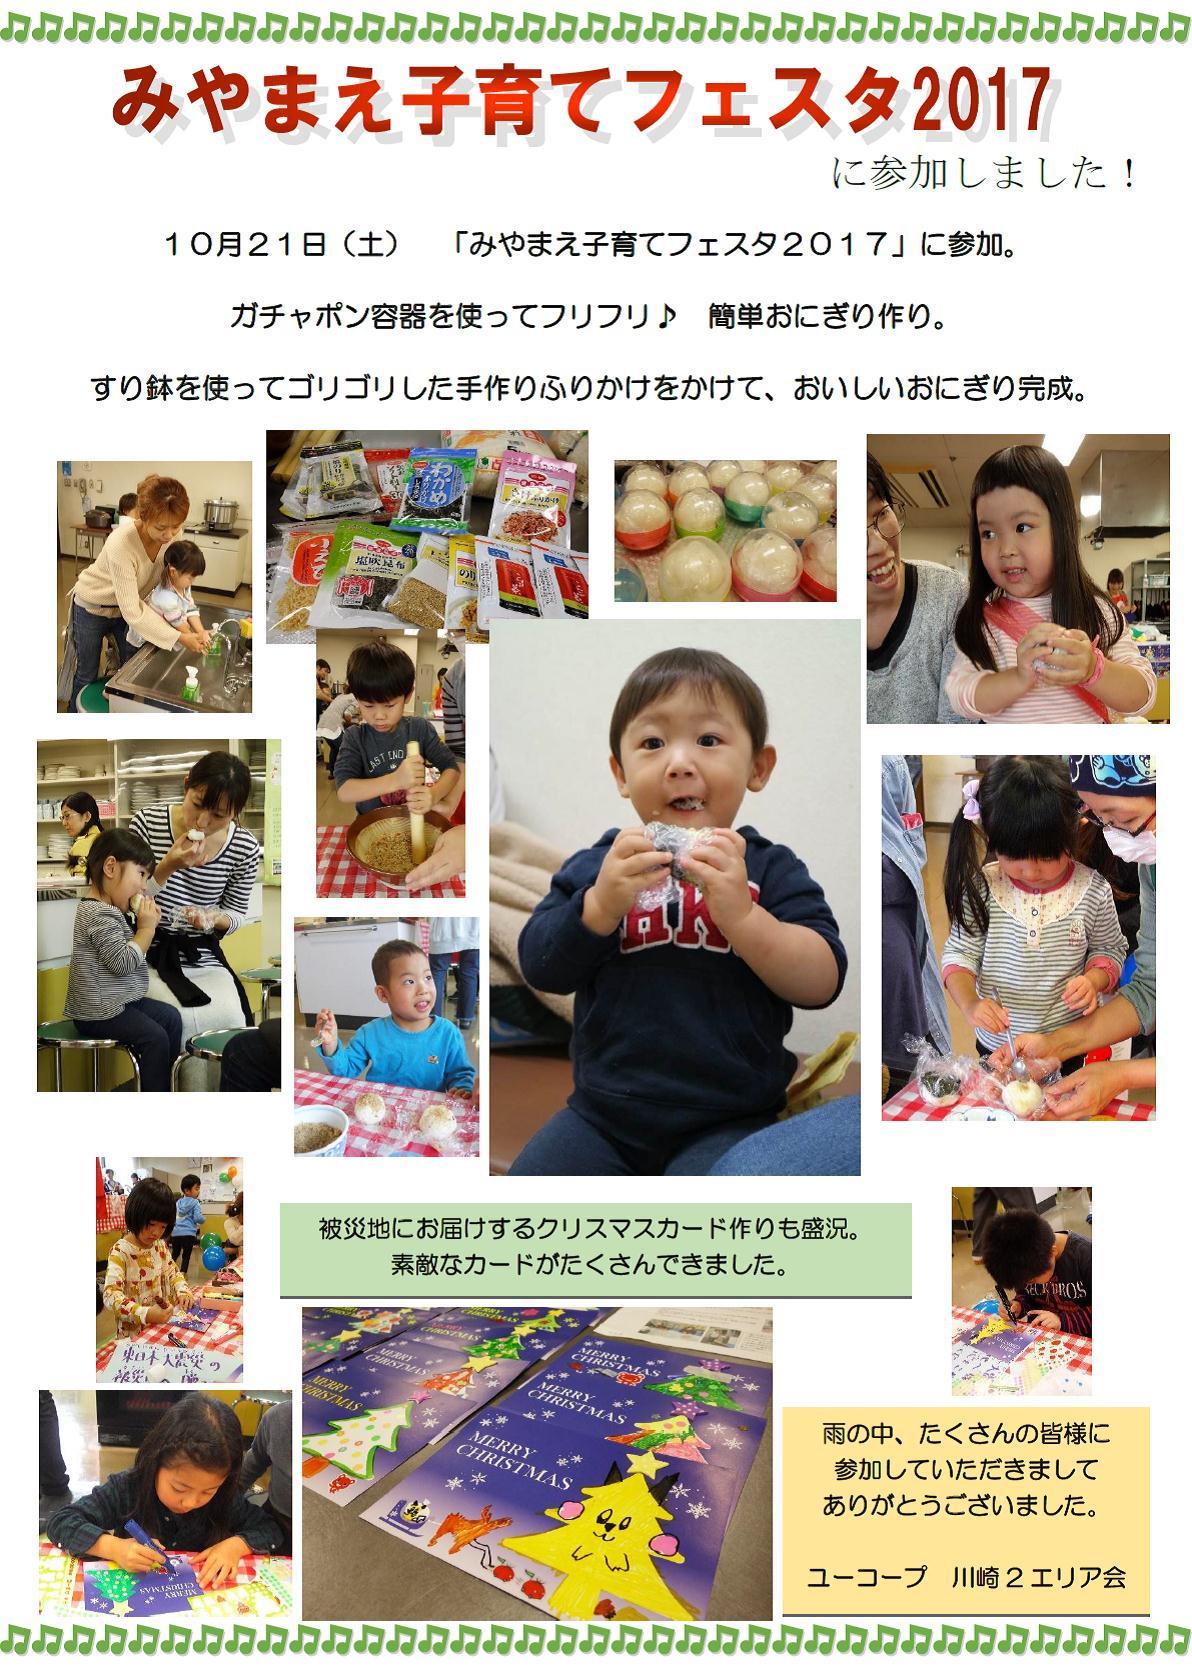 http://kanagawa.ucoop.or.jp/hiroba/areanews/files/2017-10-21%20miyamae-kawasaki2.jpg